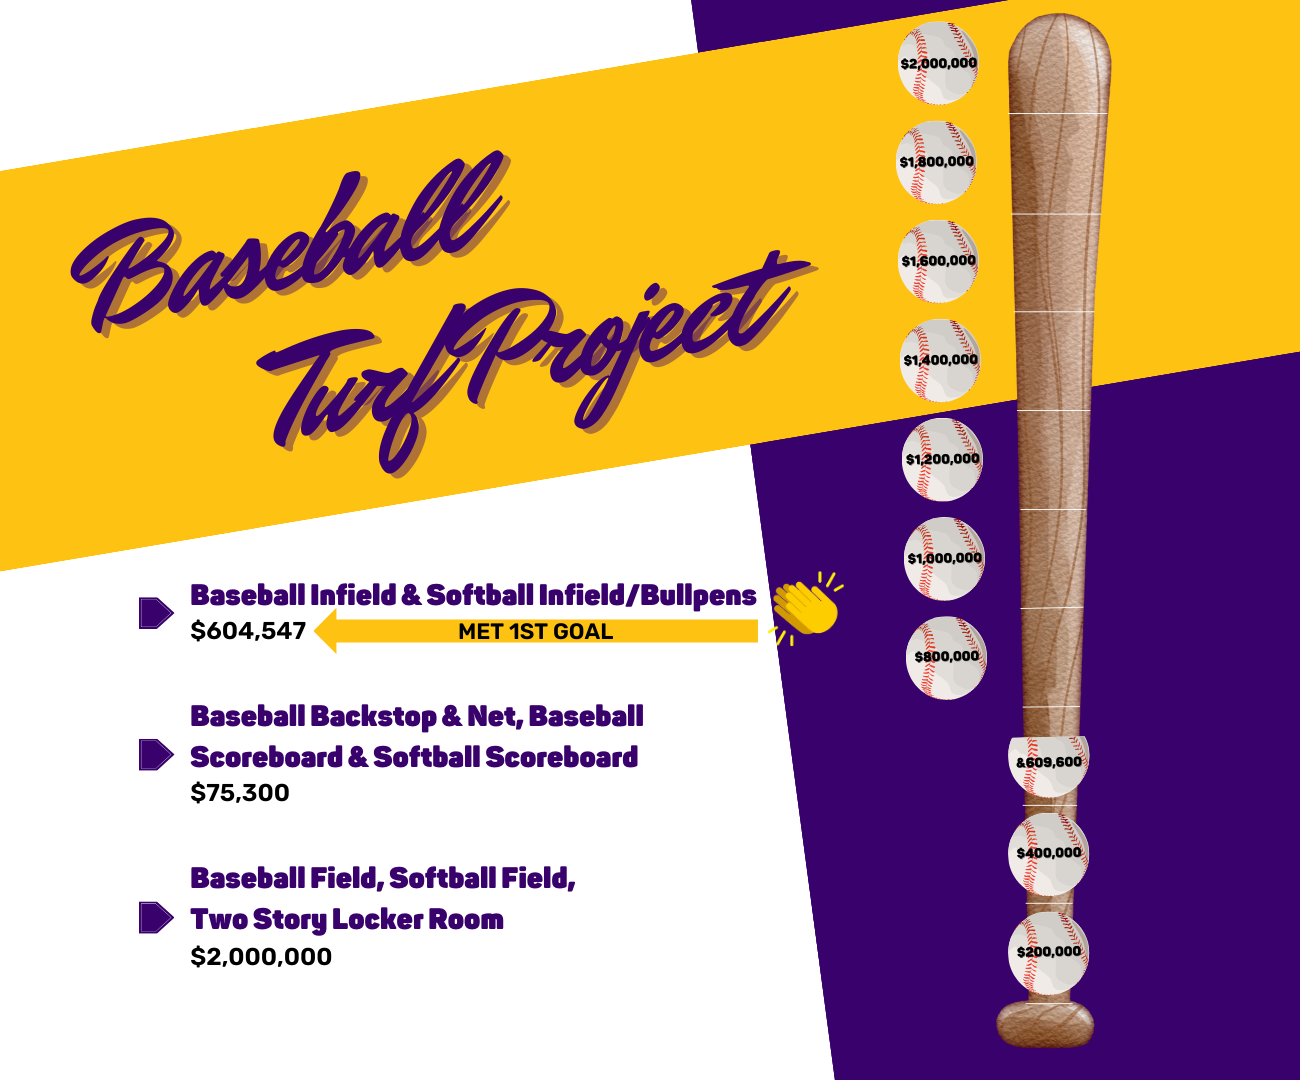 Baseball Field Turf Project Fundraiser Chart